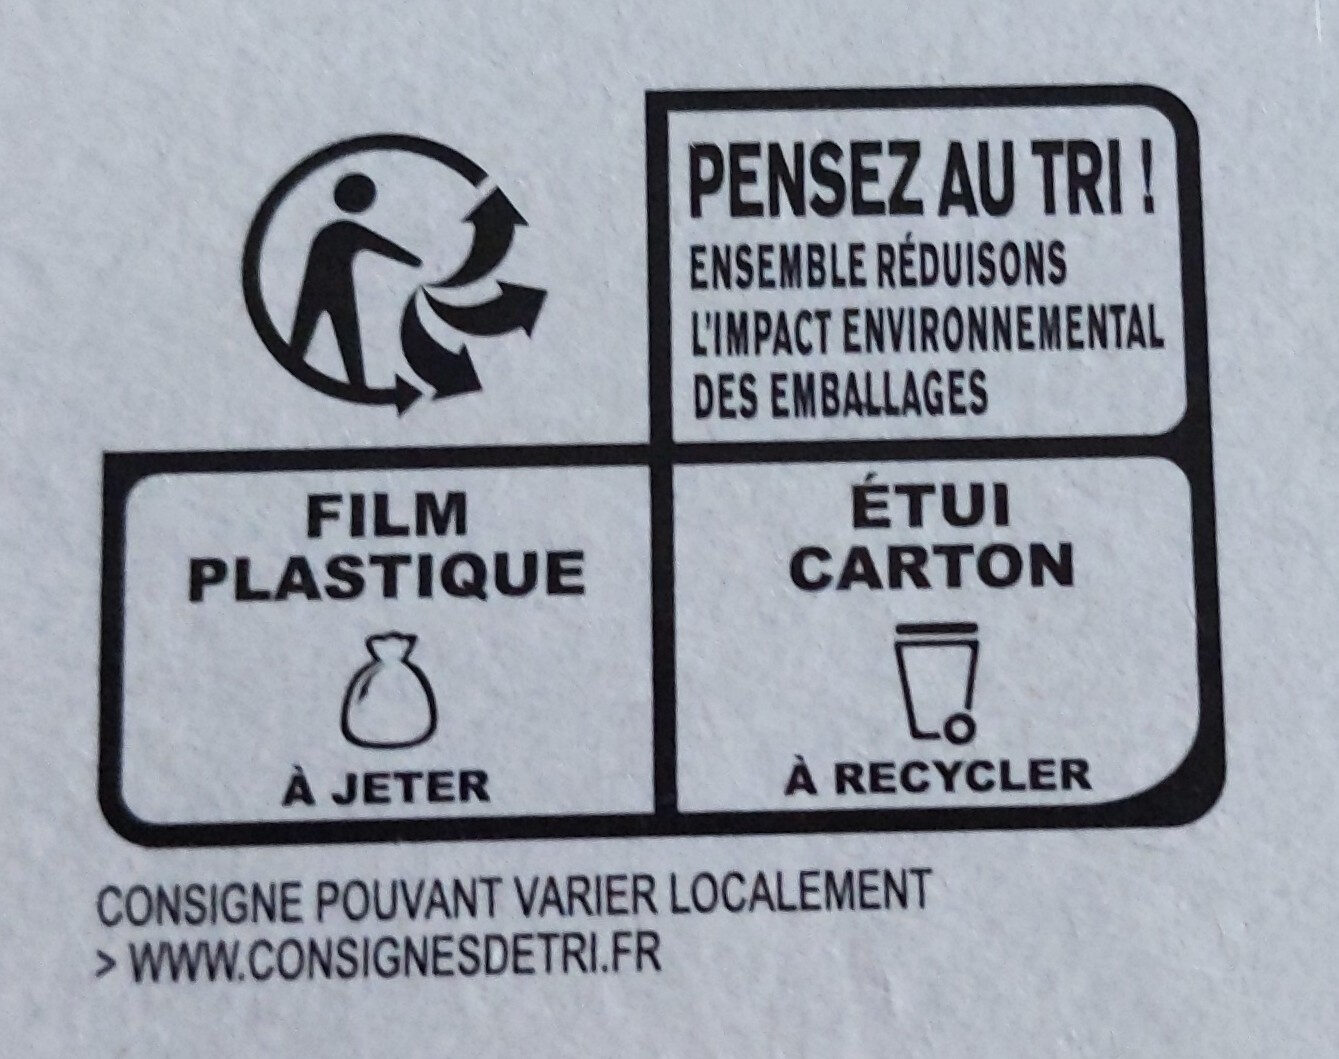 Couscous parfumé aux épices douces - Instrucciones de reciclaje y/o información de embalaje - fr